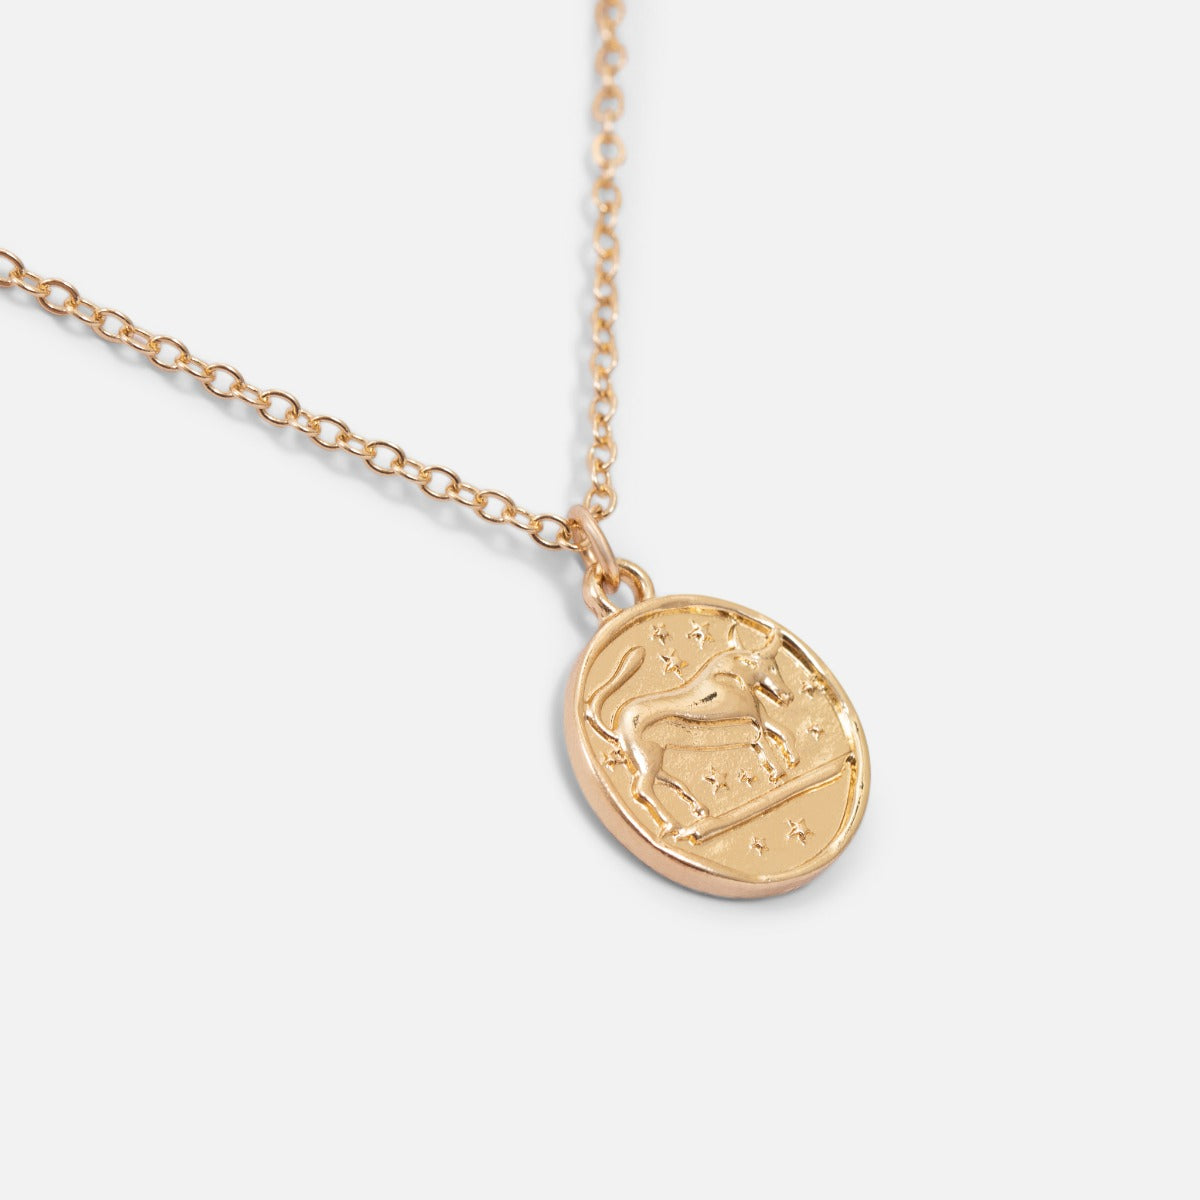 Golden pendant astrological sign "taurus"